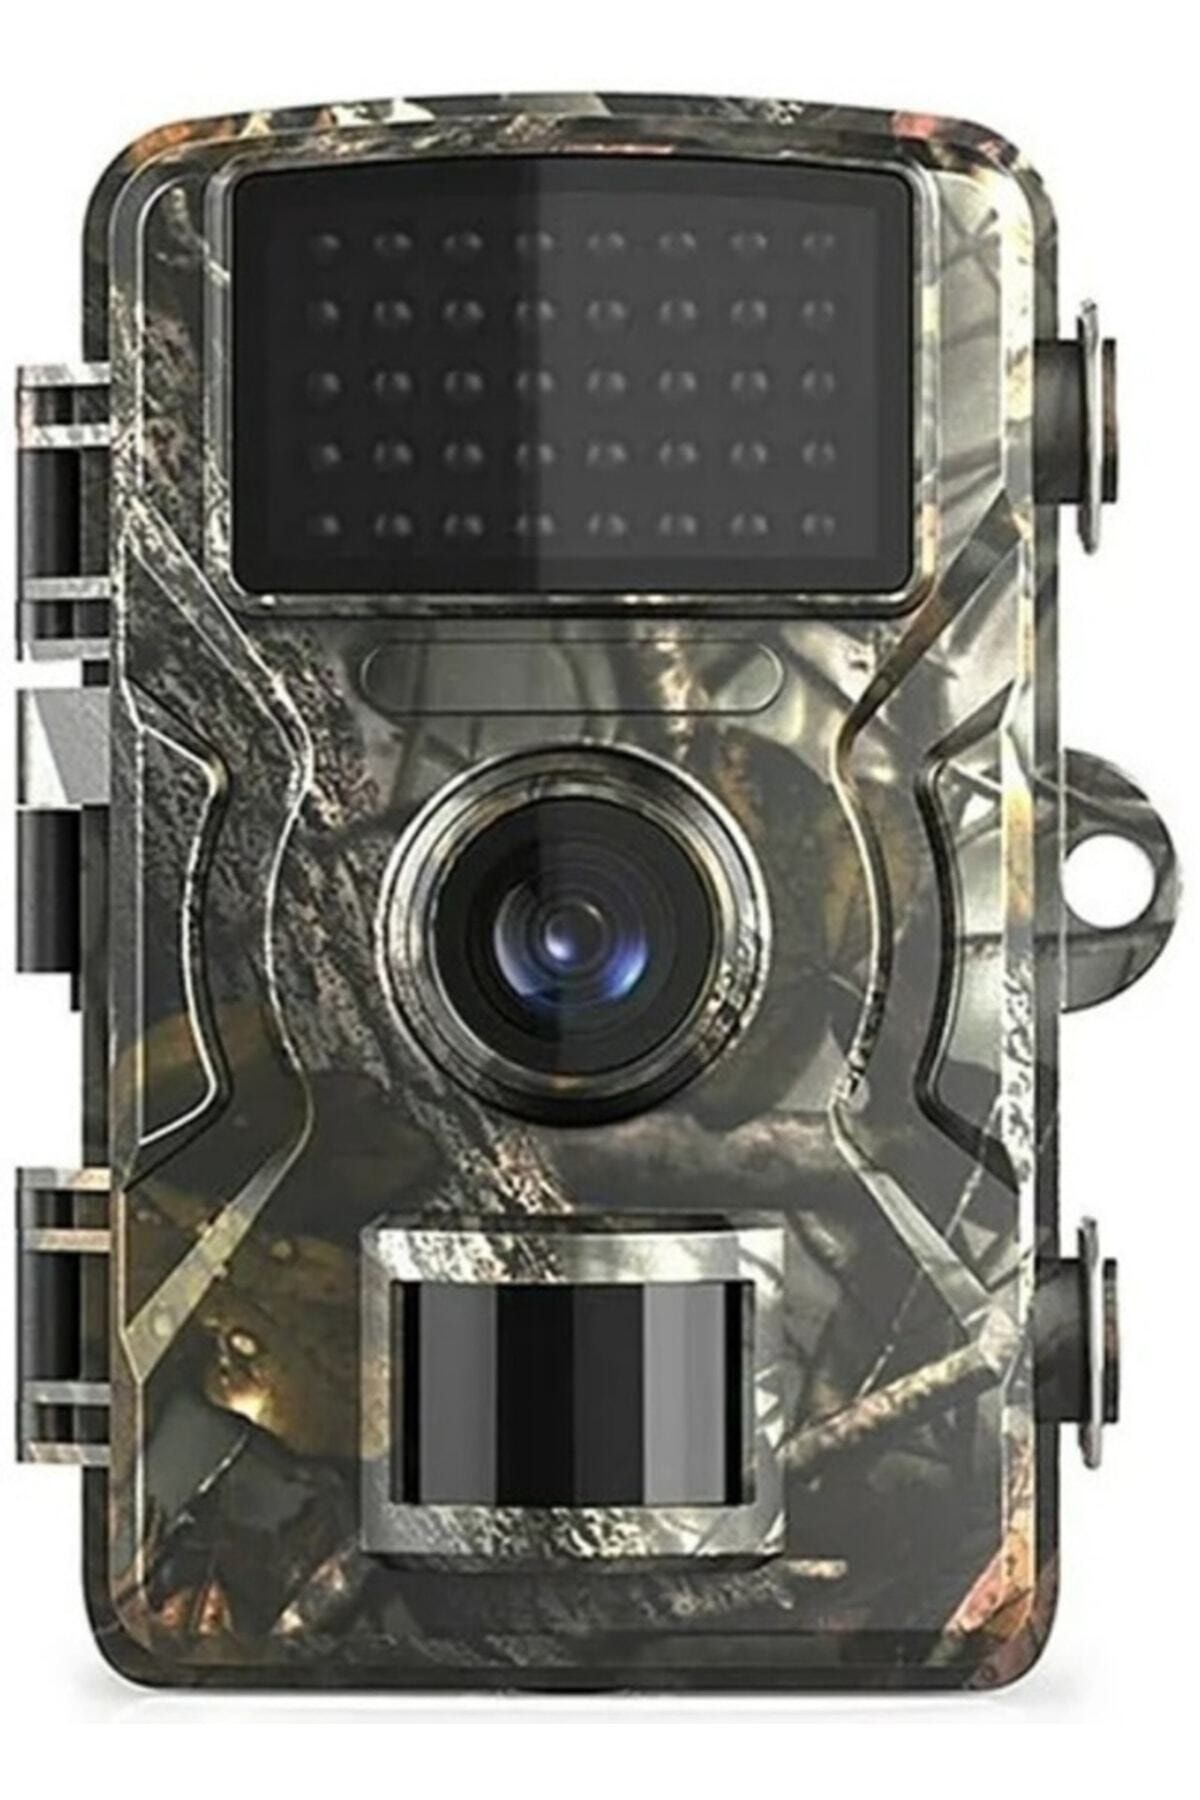 Silicon Valley Fotokapan trail Kamera 16mp Full Hd 1080p Gece Görüşlü Hayvan izleme kamerası IP66